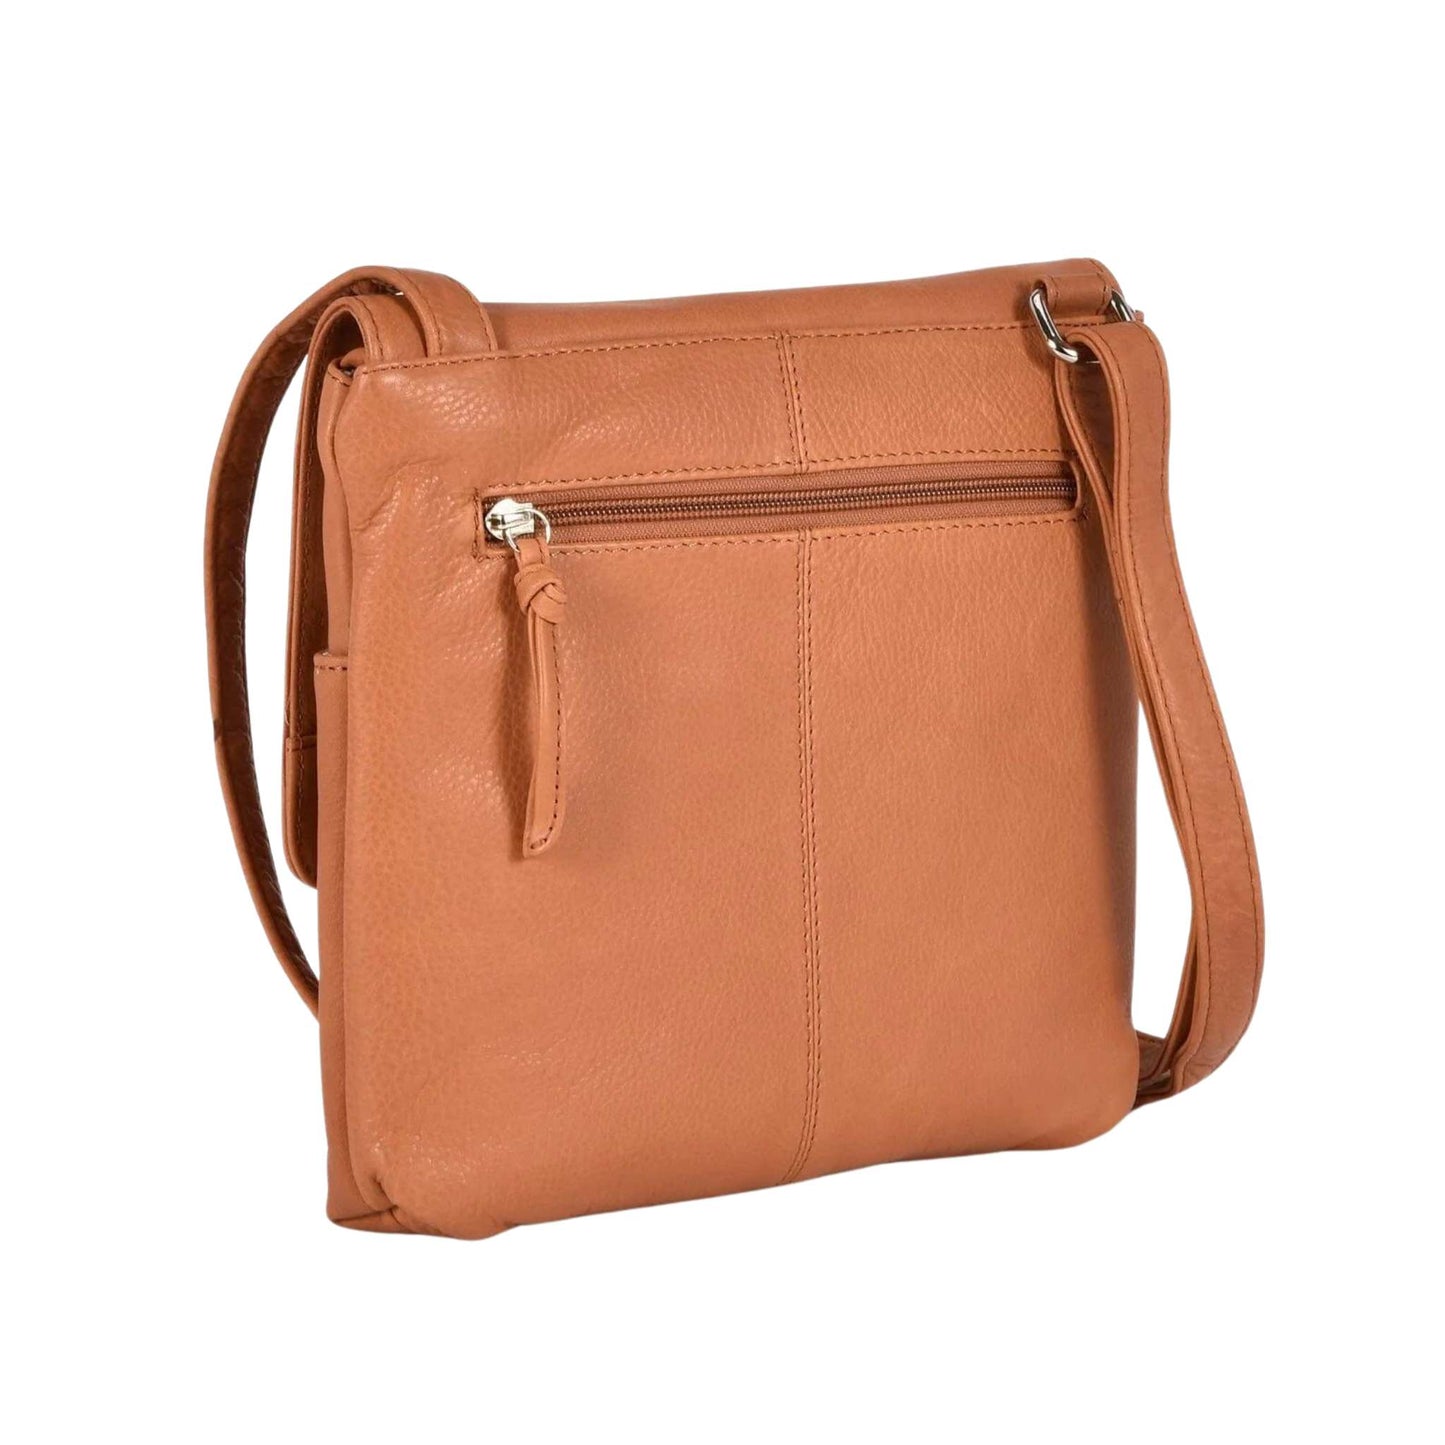 Ava Leather Flapover Crossbody Bag - Tan